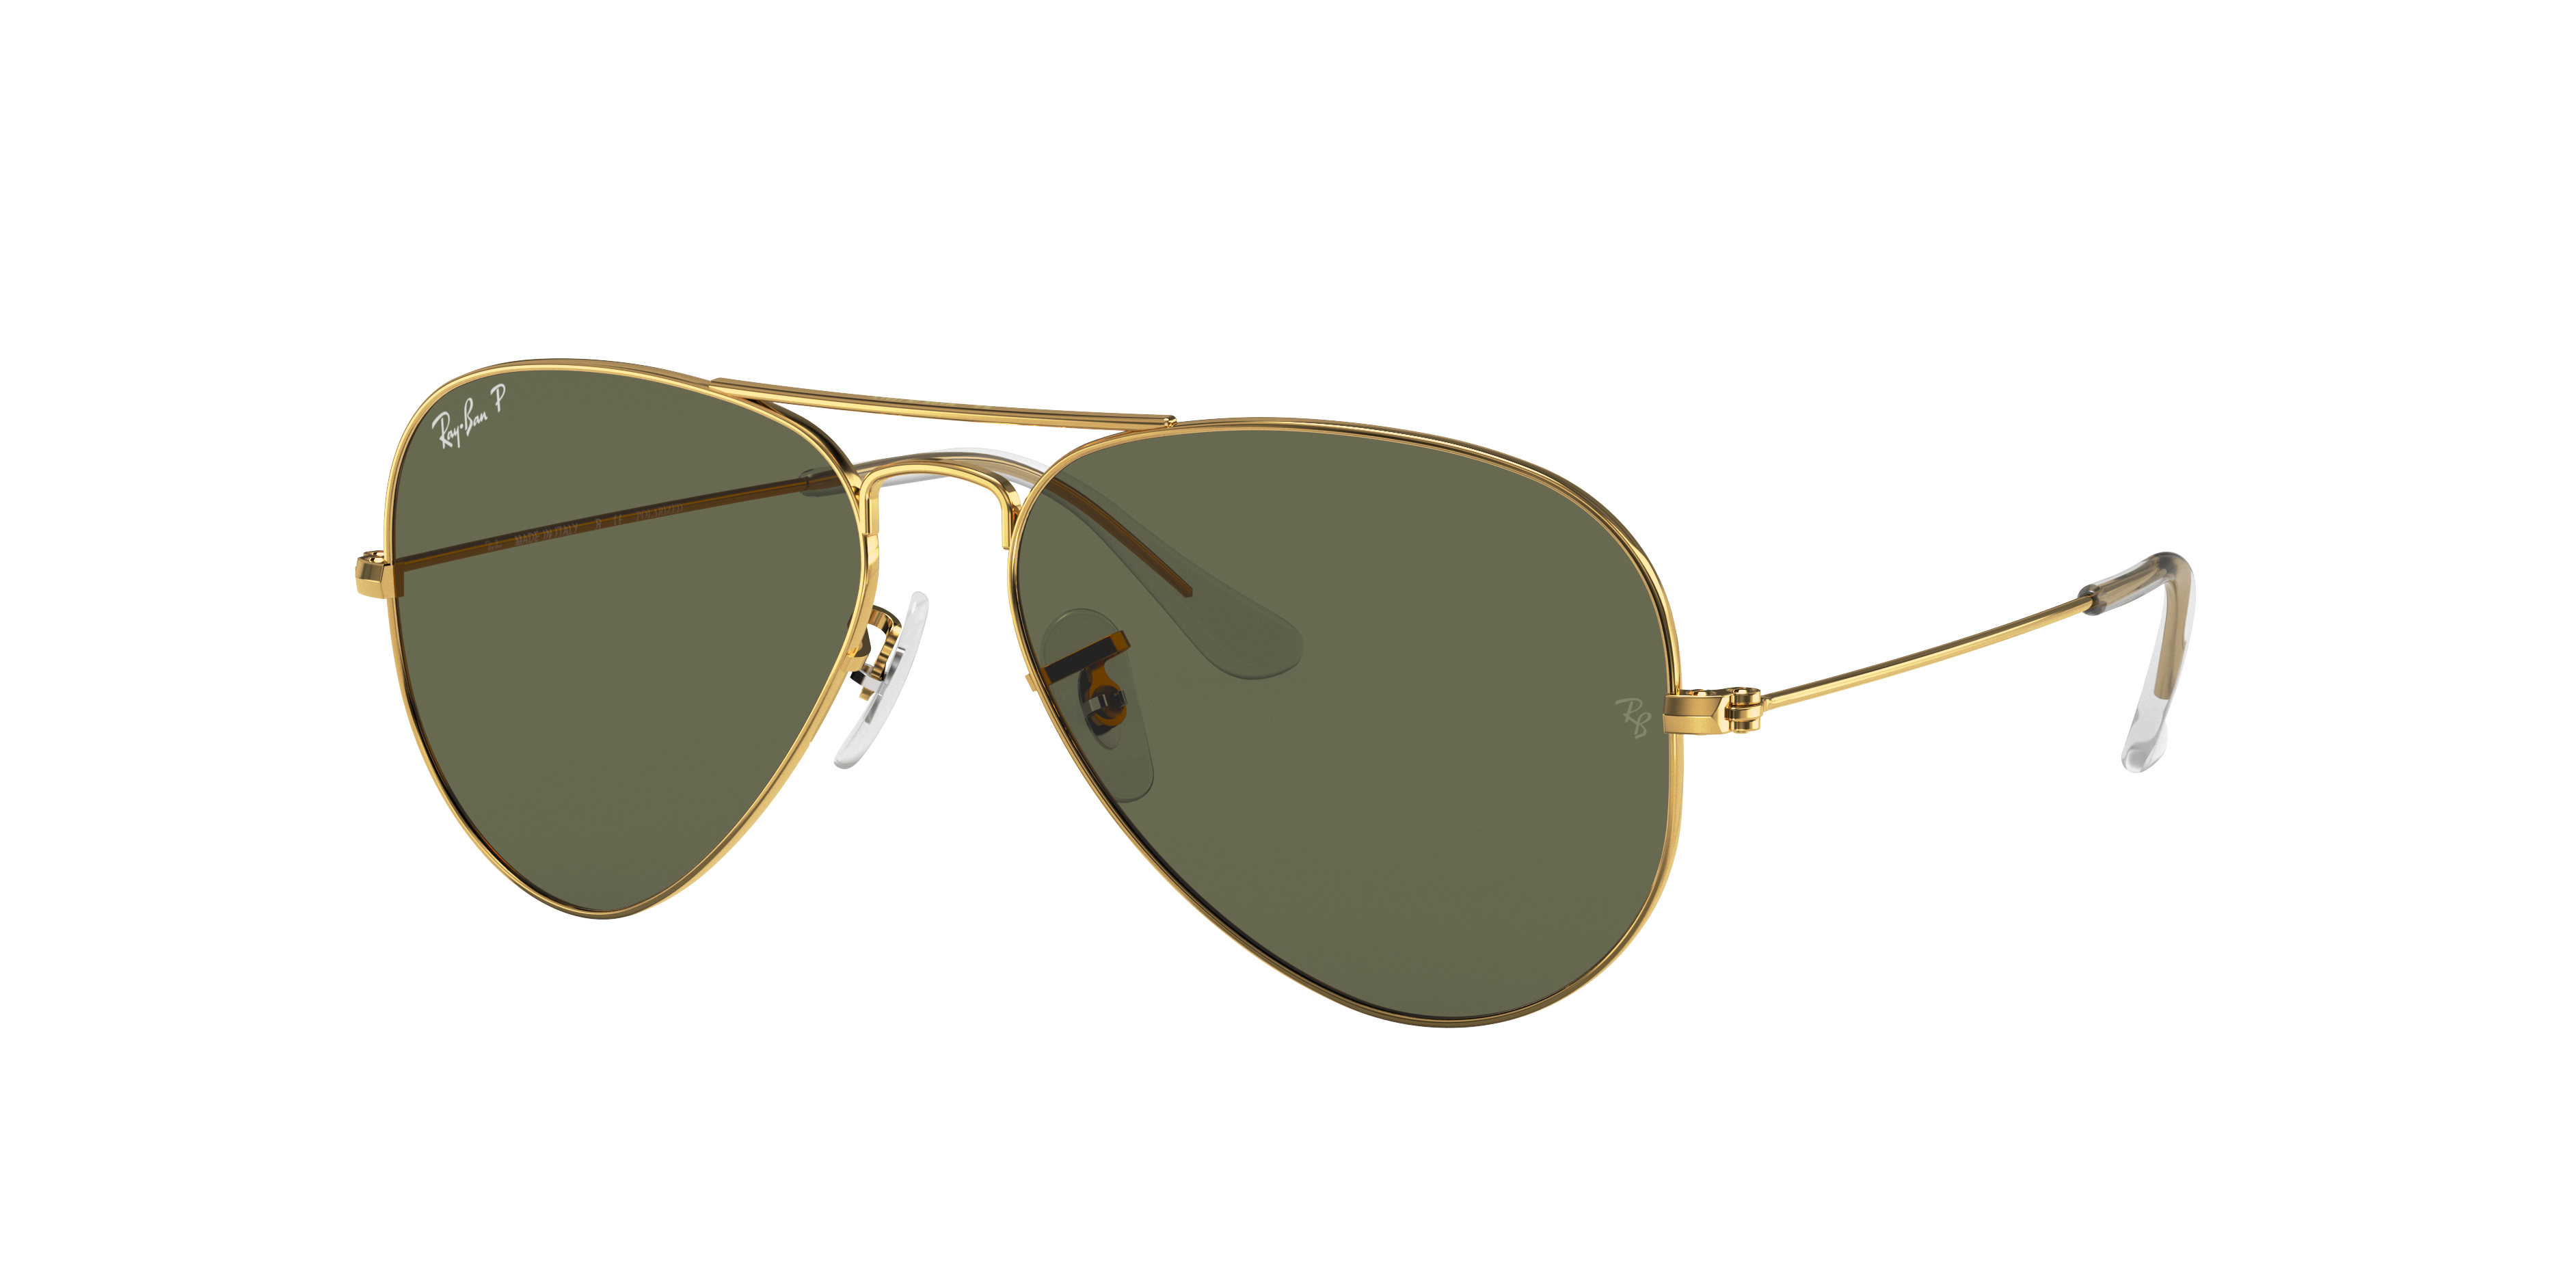 POLARIZED Aviator Sunglasses GOLD Metal Retro Classic 